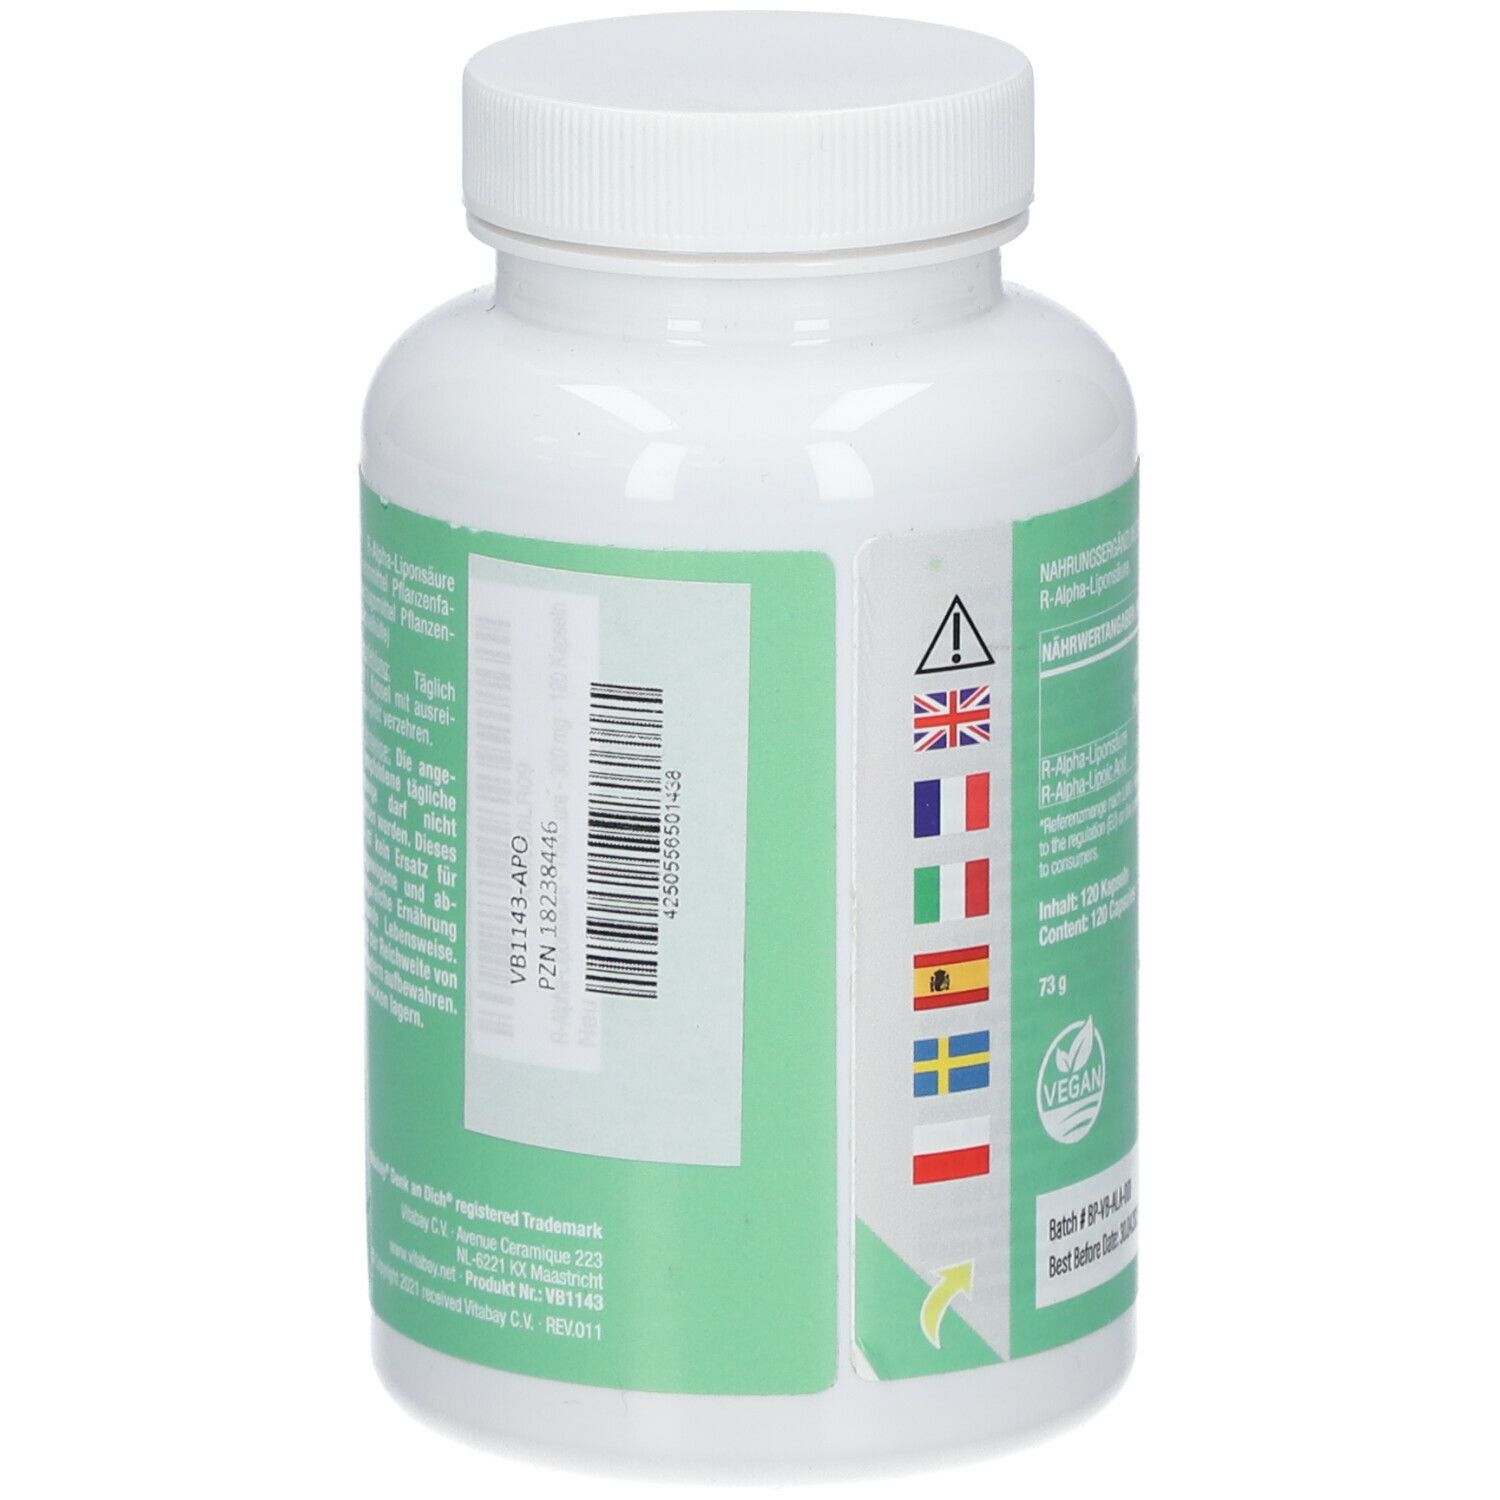 Vitabay R-Alpha-Liponsäure 300 mg